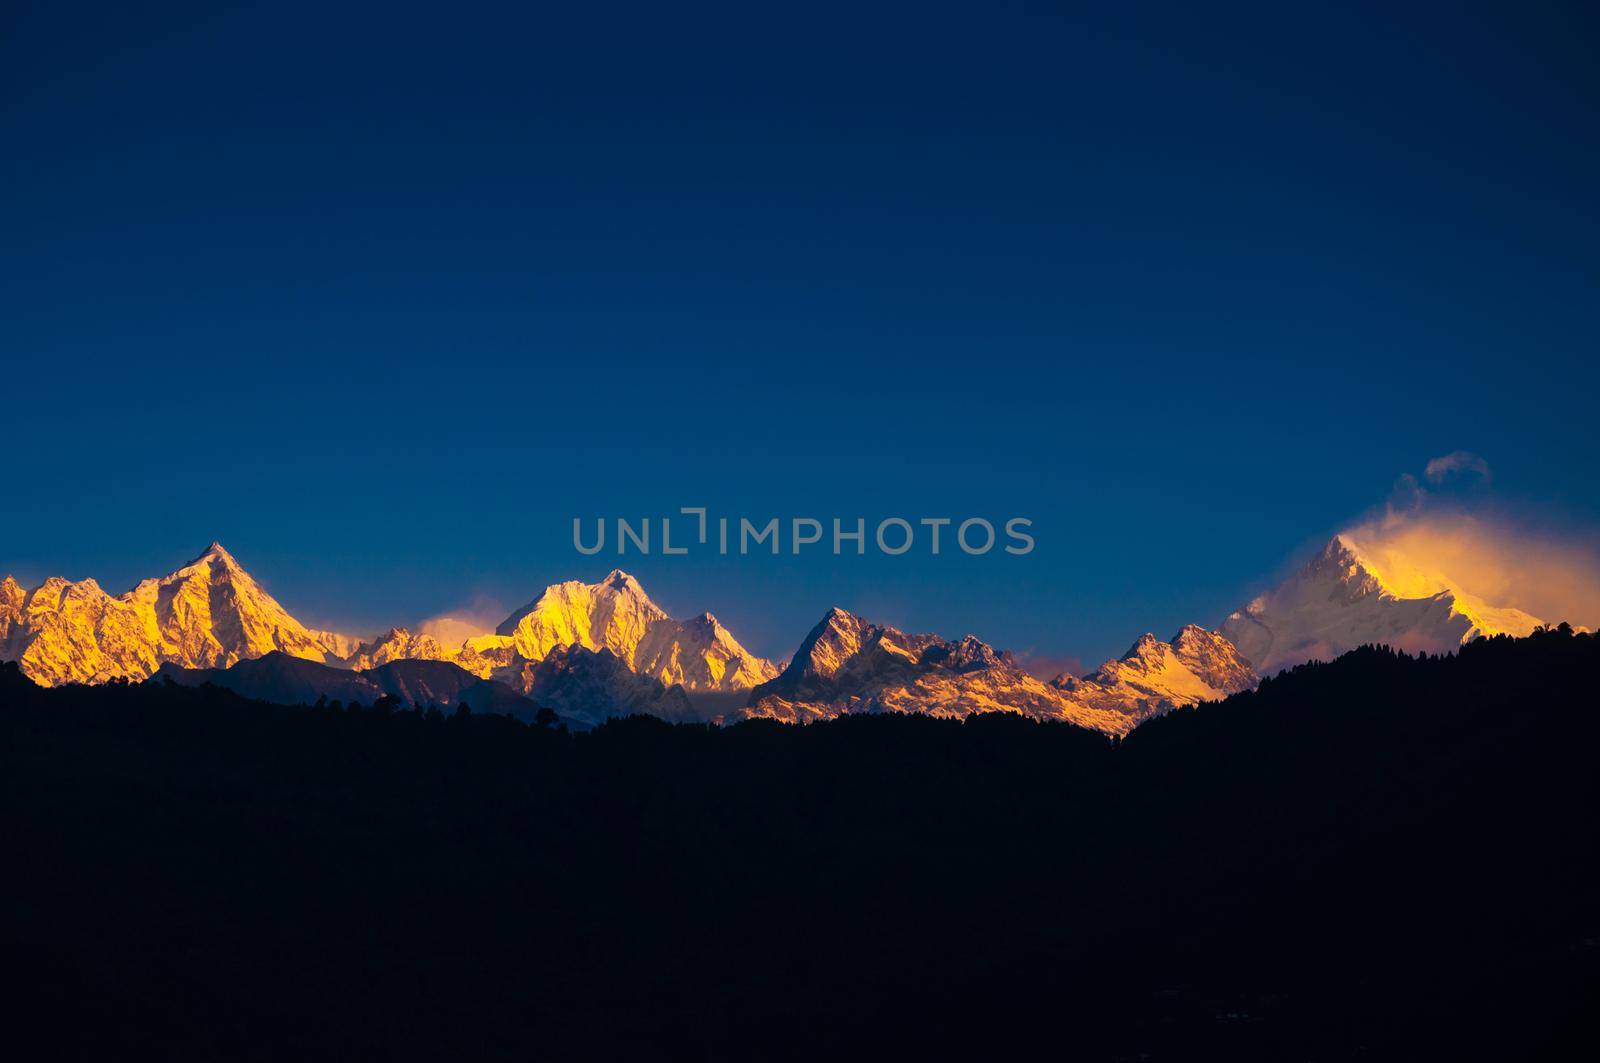 The majestic Kanchenjunga range of the himalayas at first light of sunrise at Sikkim , India